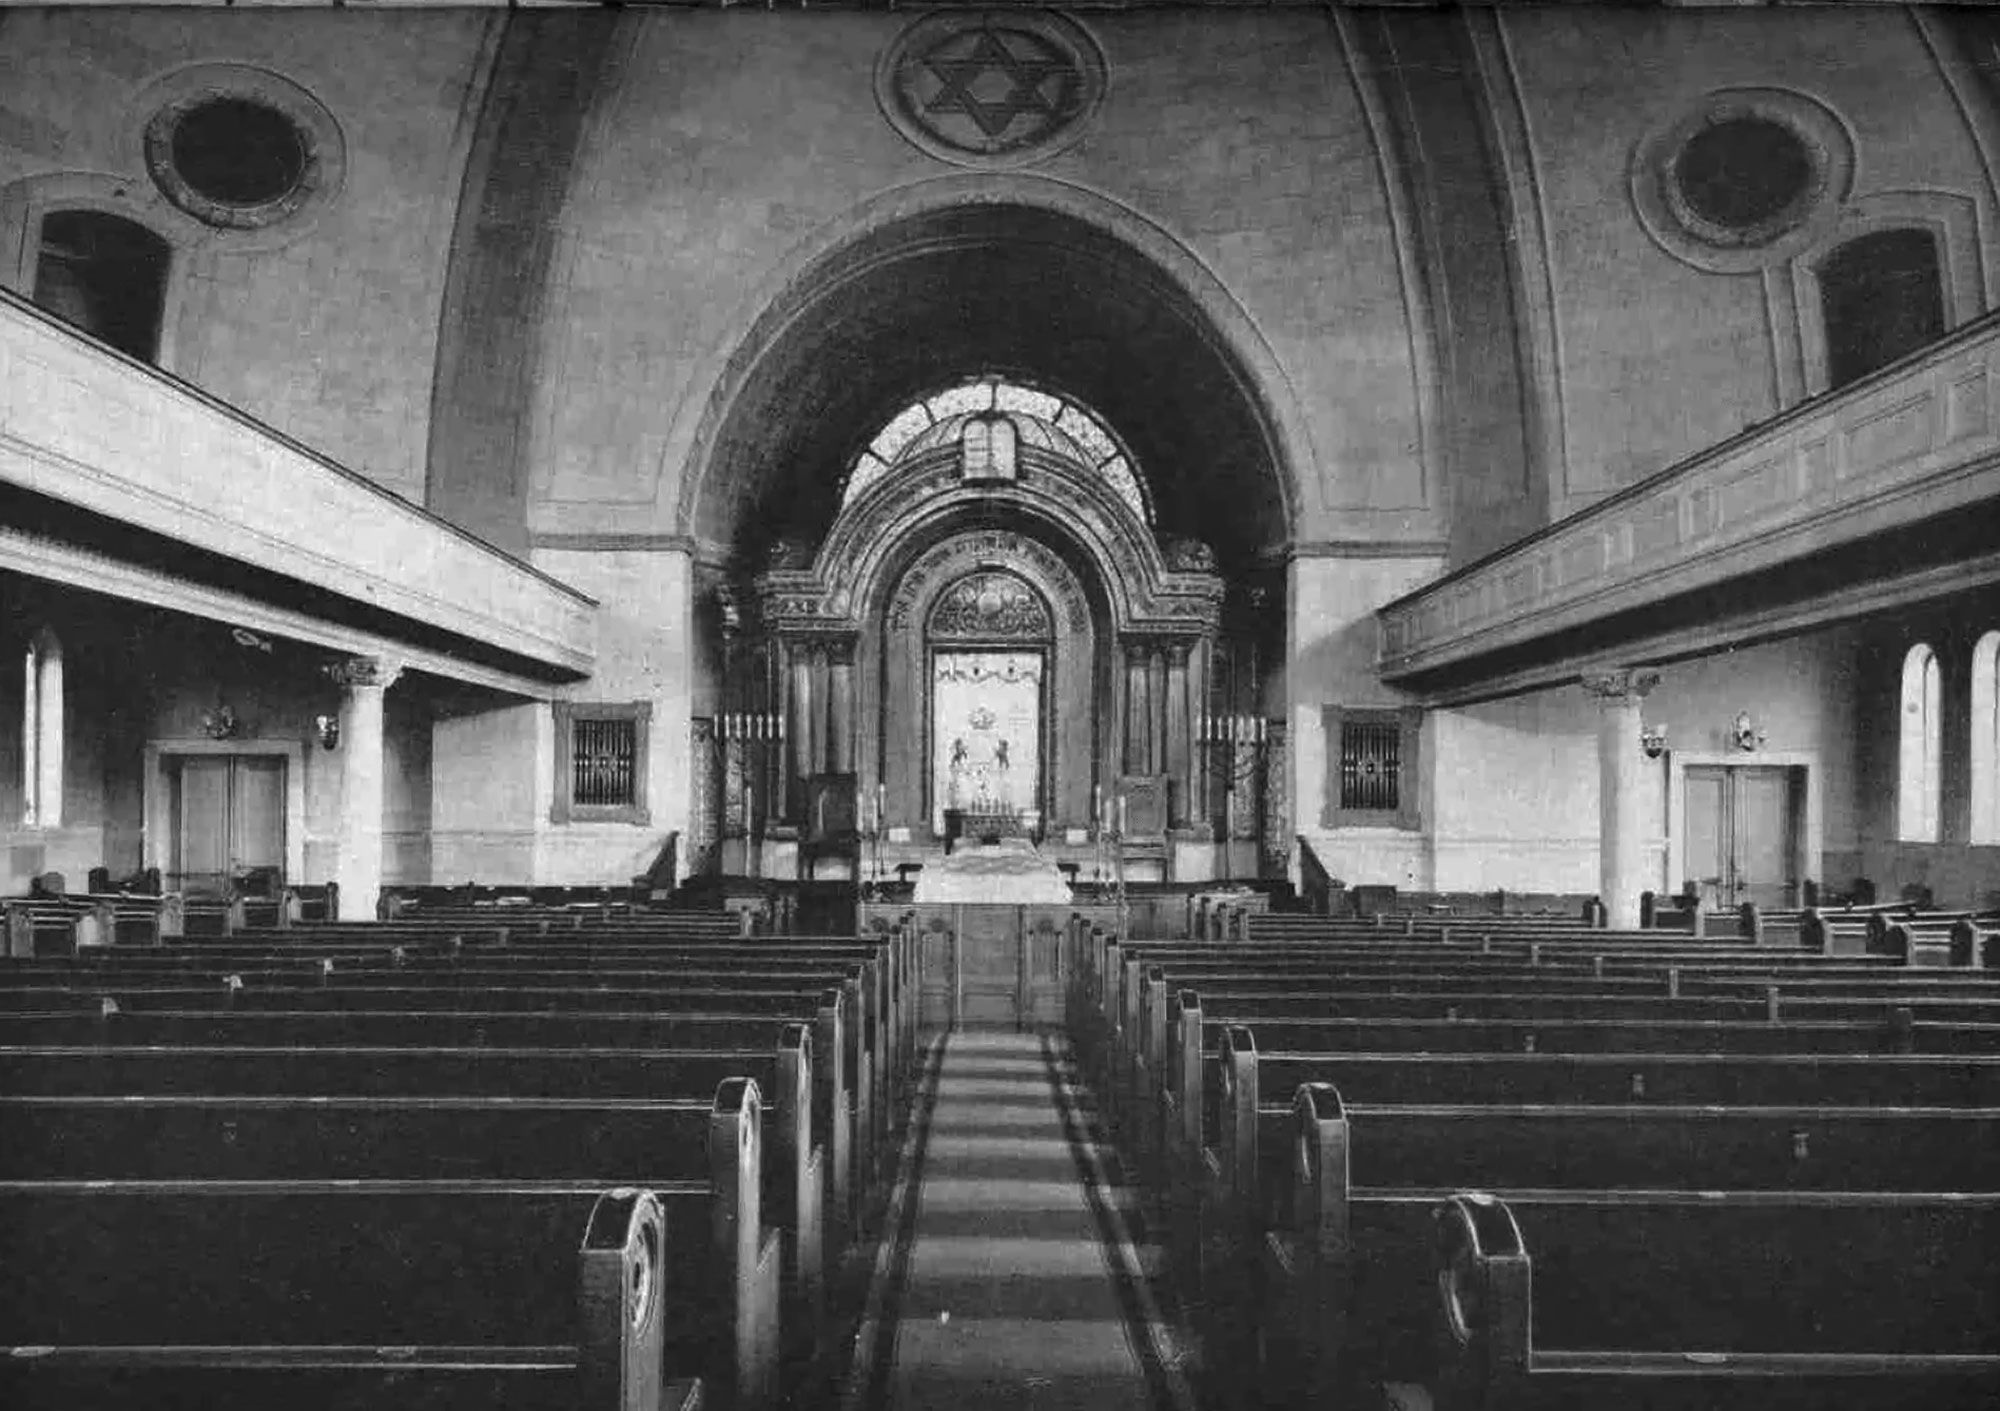 Inside the Bikur Cholim synagogue when empty